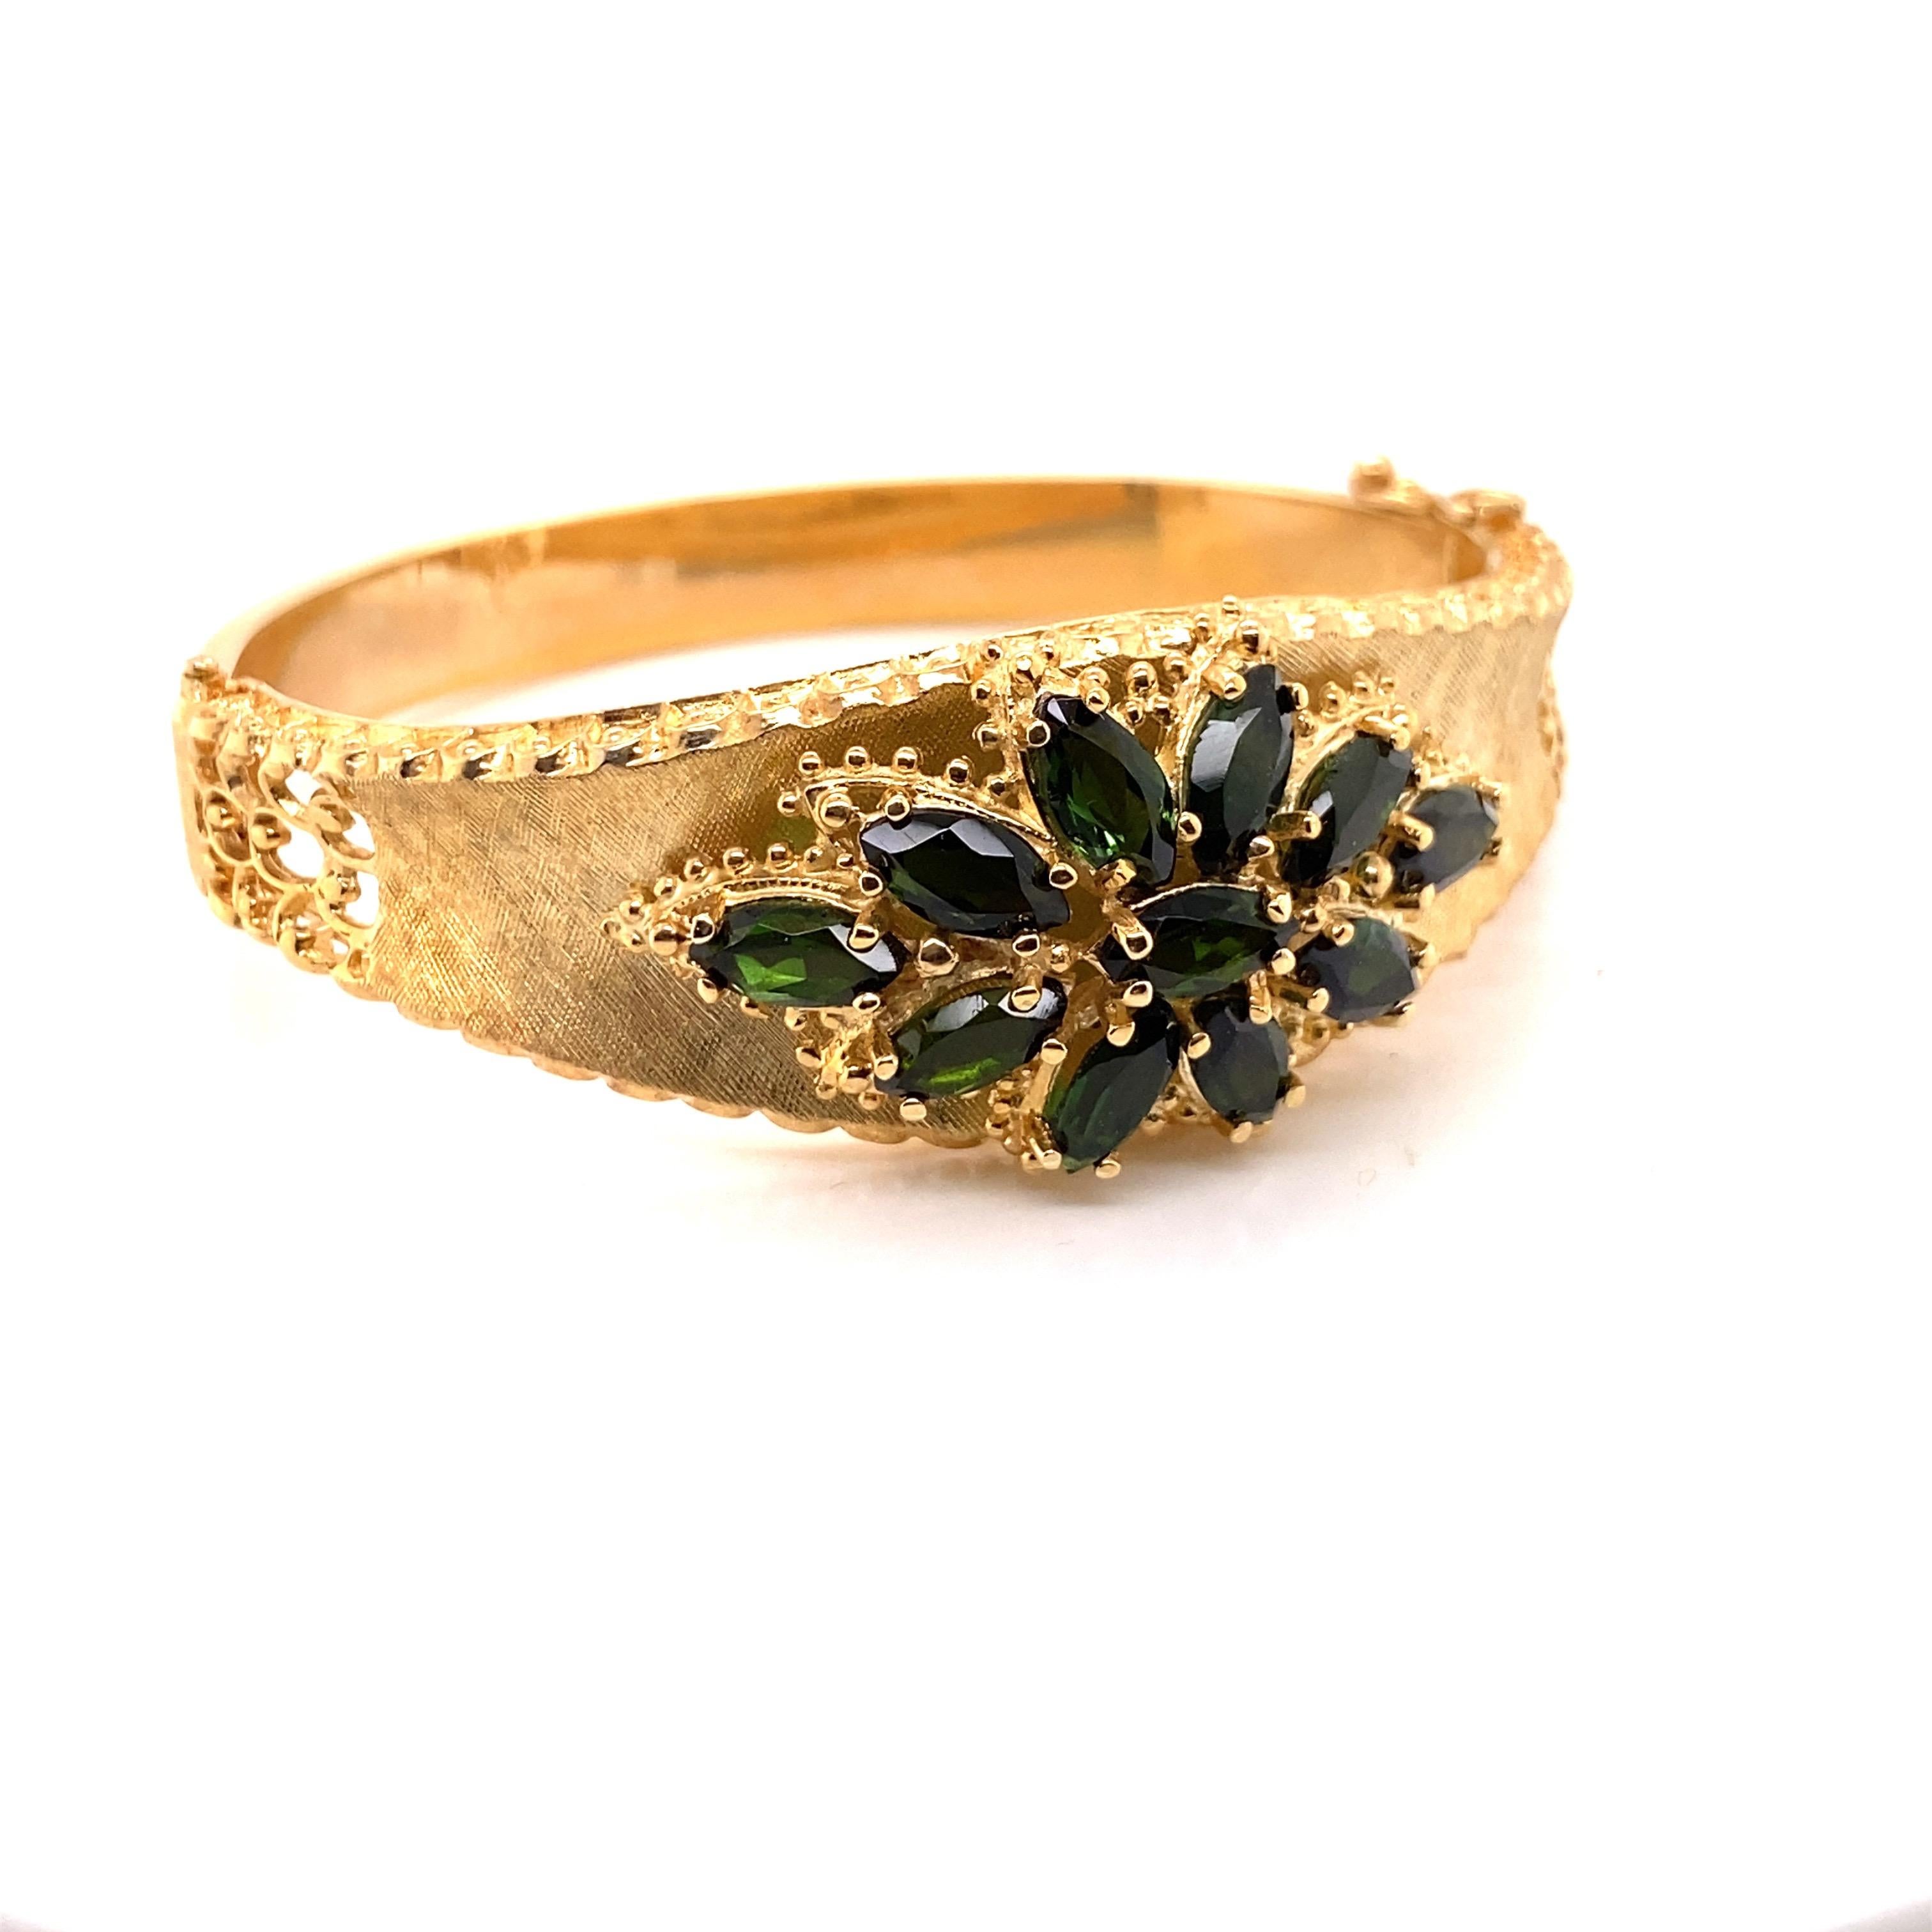 Women's Vintage 14K Yellow Gold Bangle Bracelet with Green Tourmaline